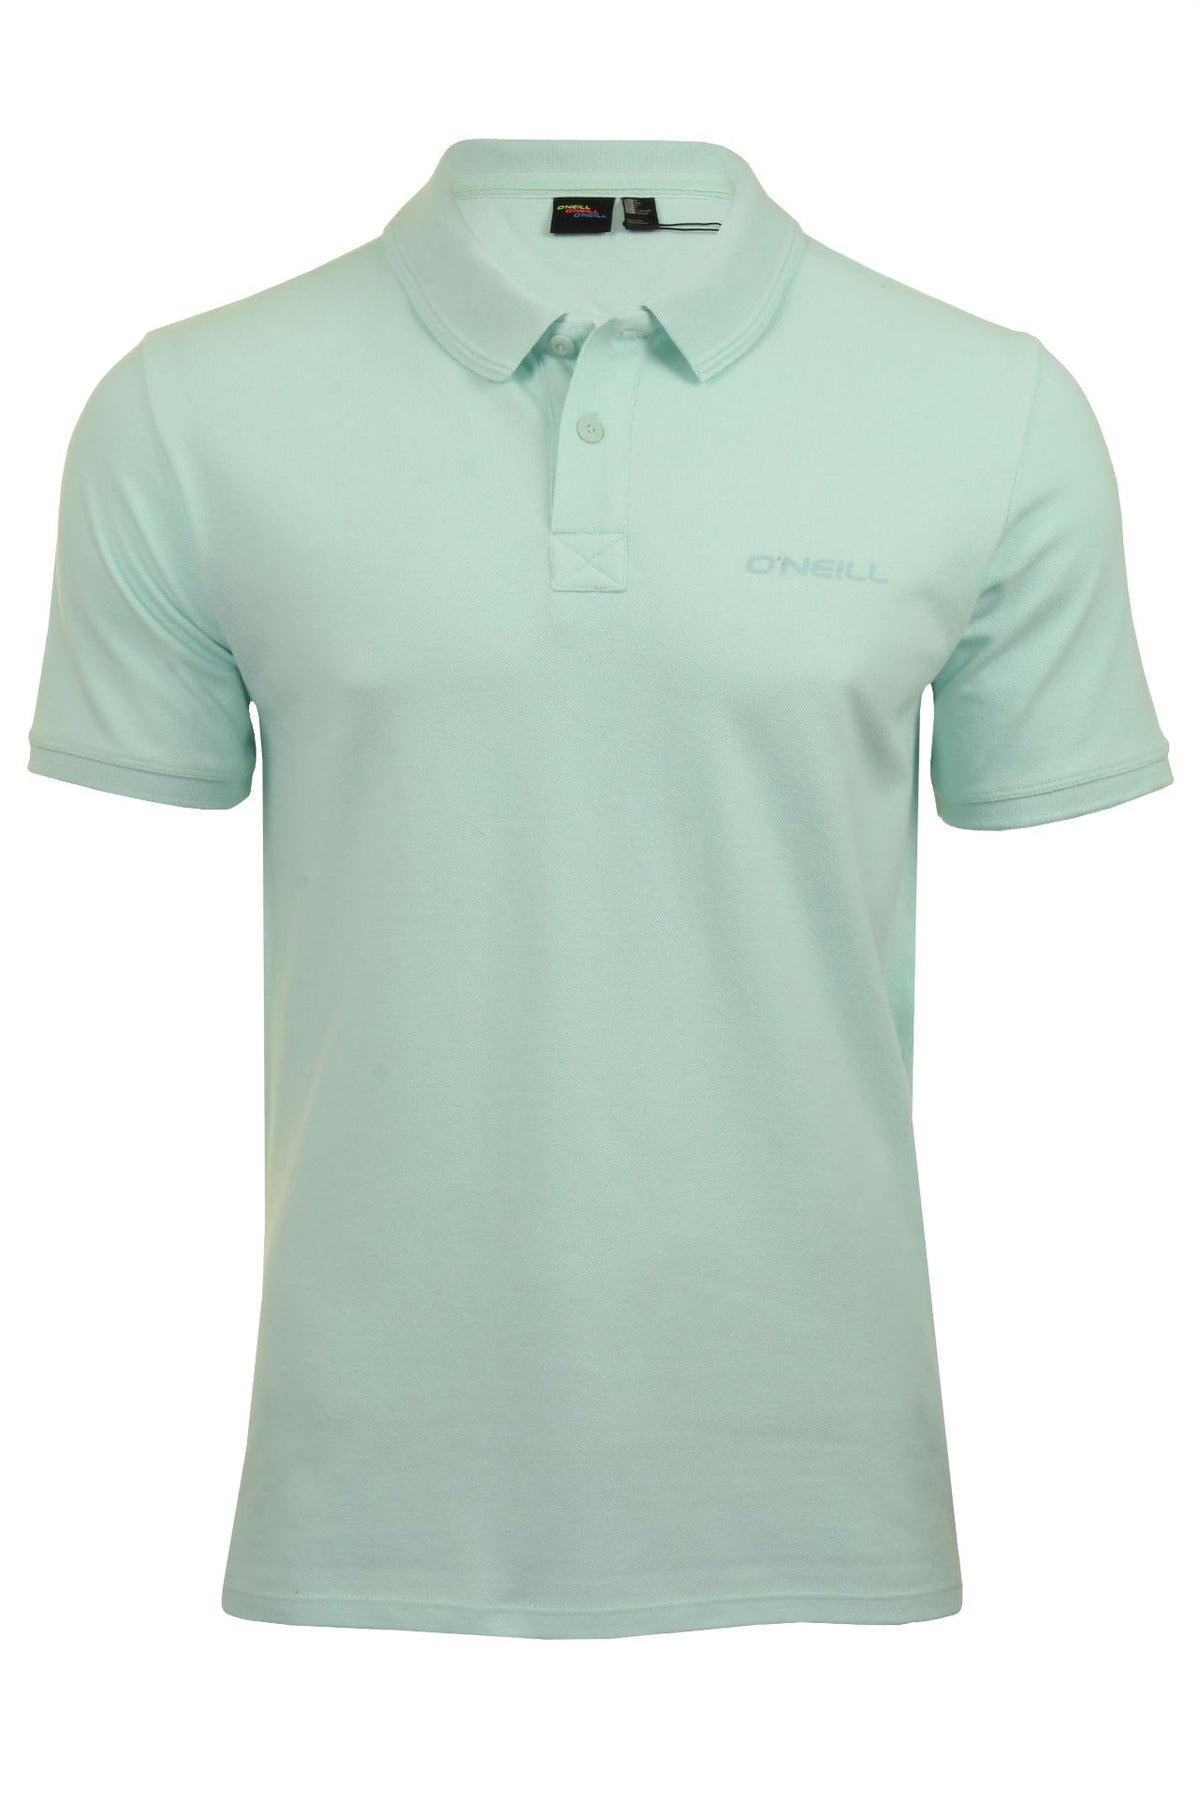 O'Neill Mens Pique Polo T-Shirt, 01, 9A2402, Water